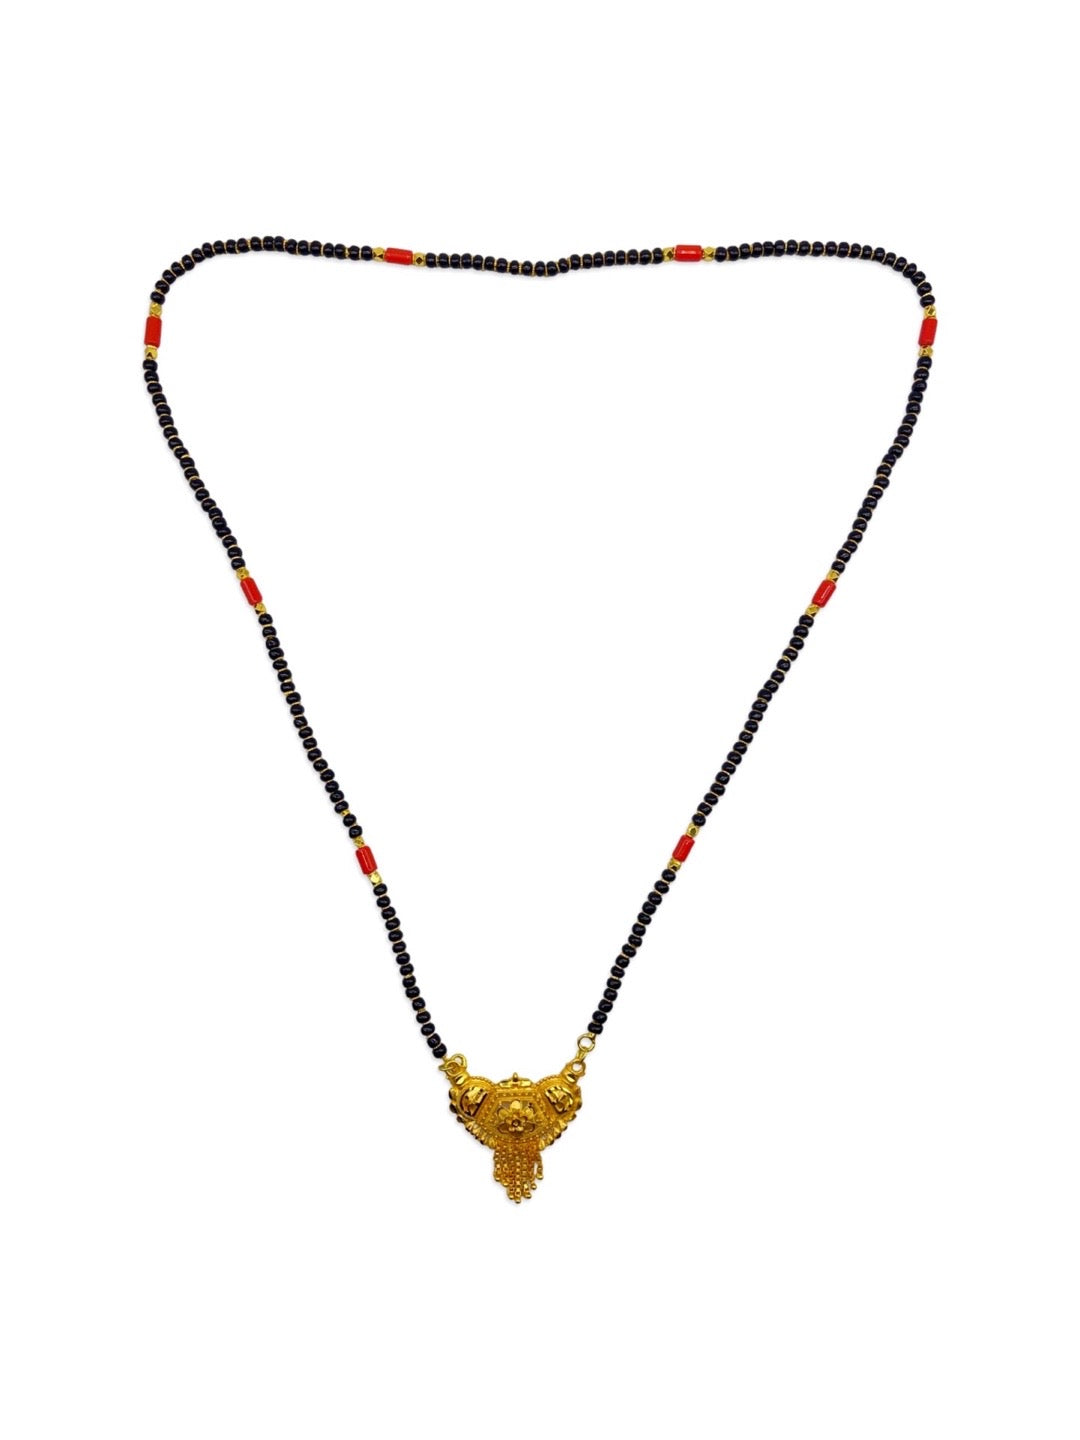 gold mangalsutra pendant